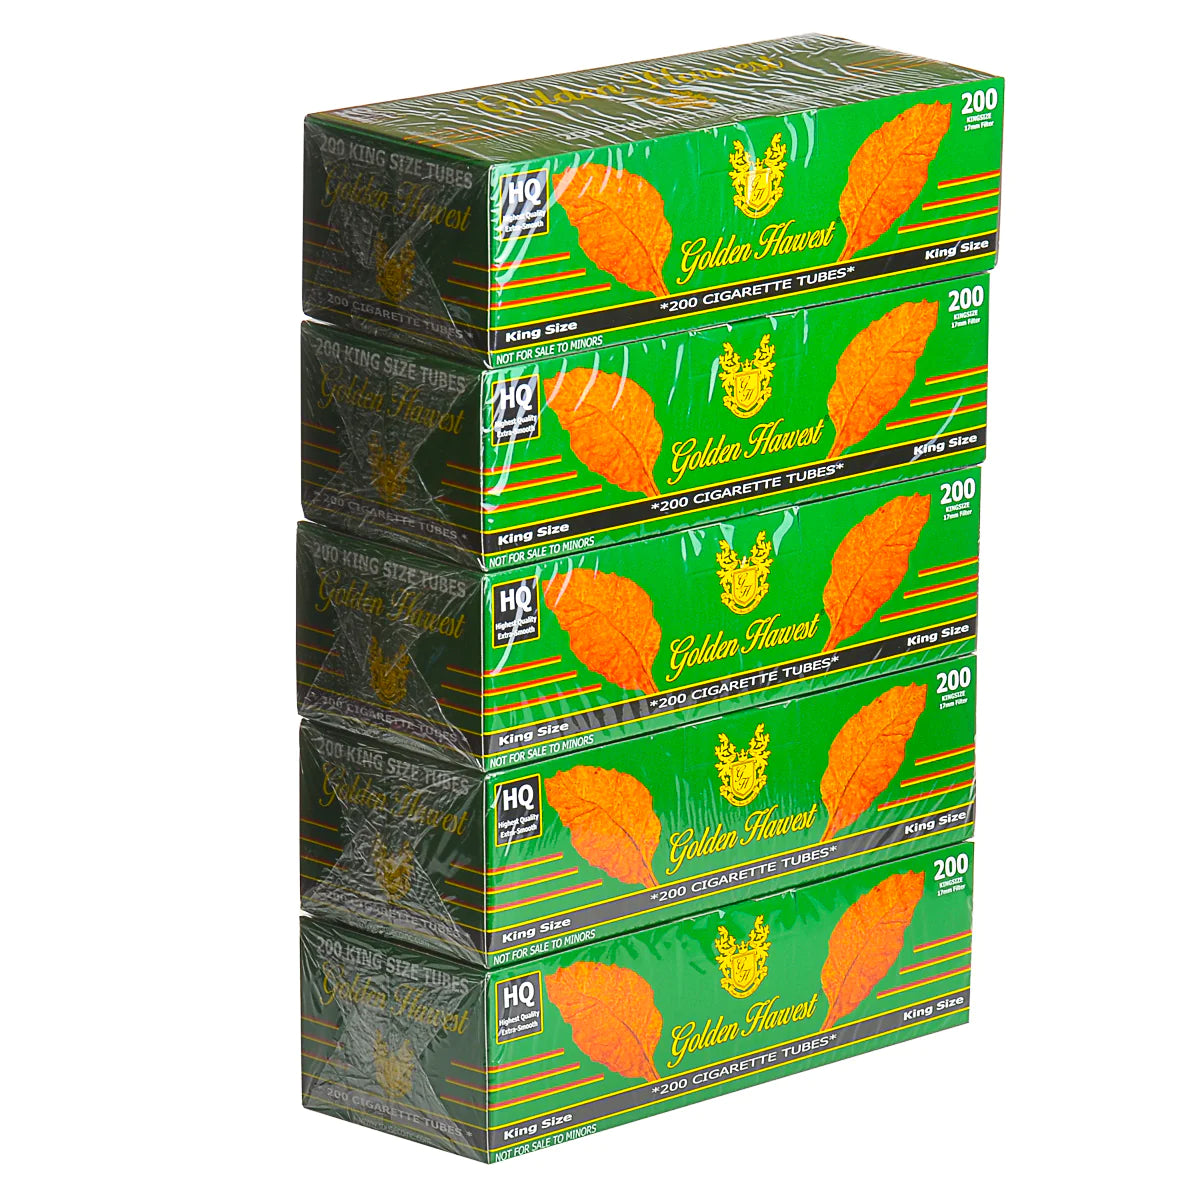 Golden Harvest Cigarette Filter Tubes | Green King Size with Packaging 